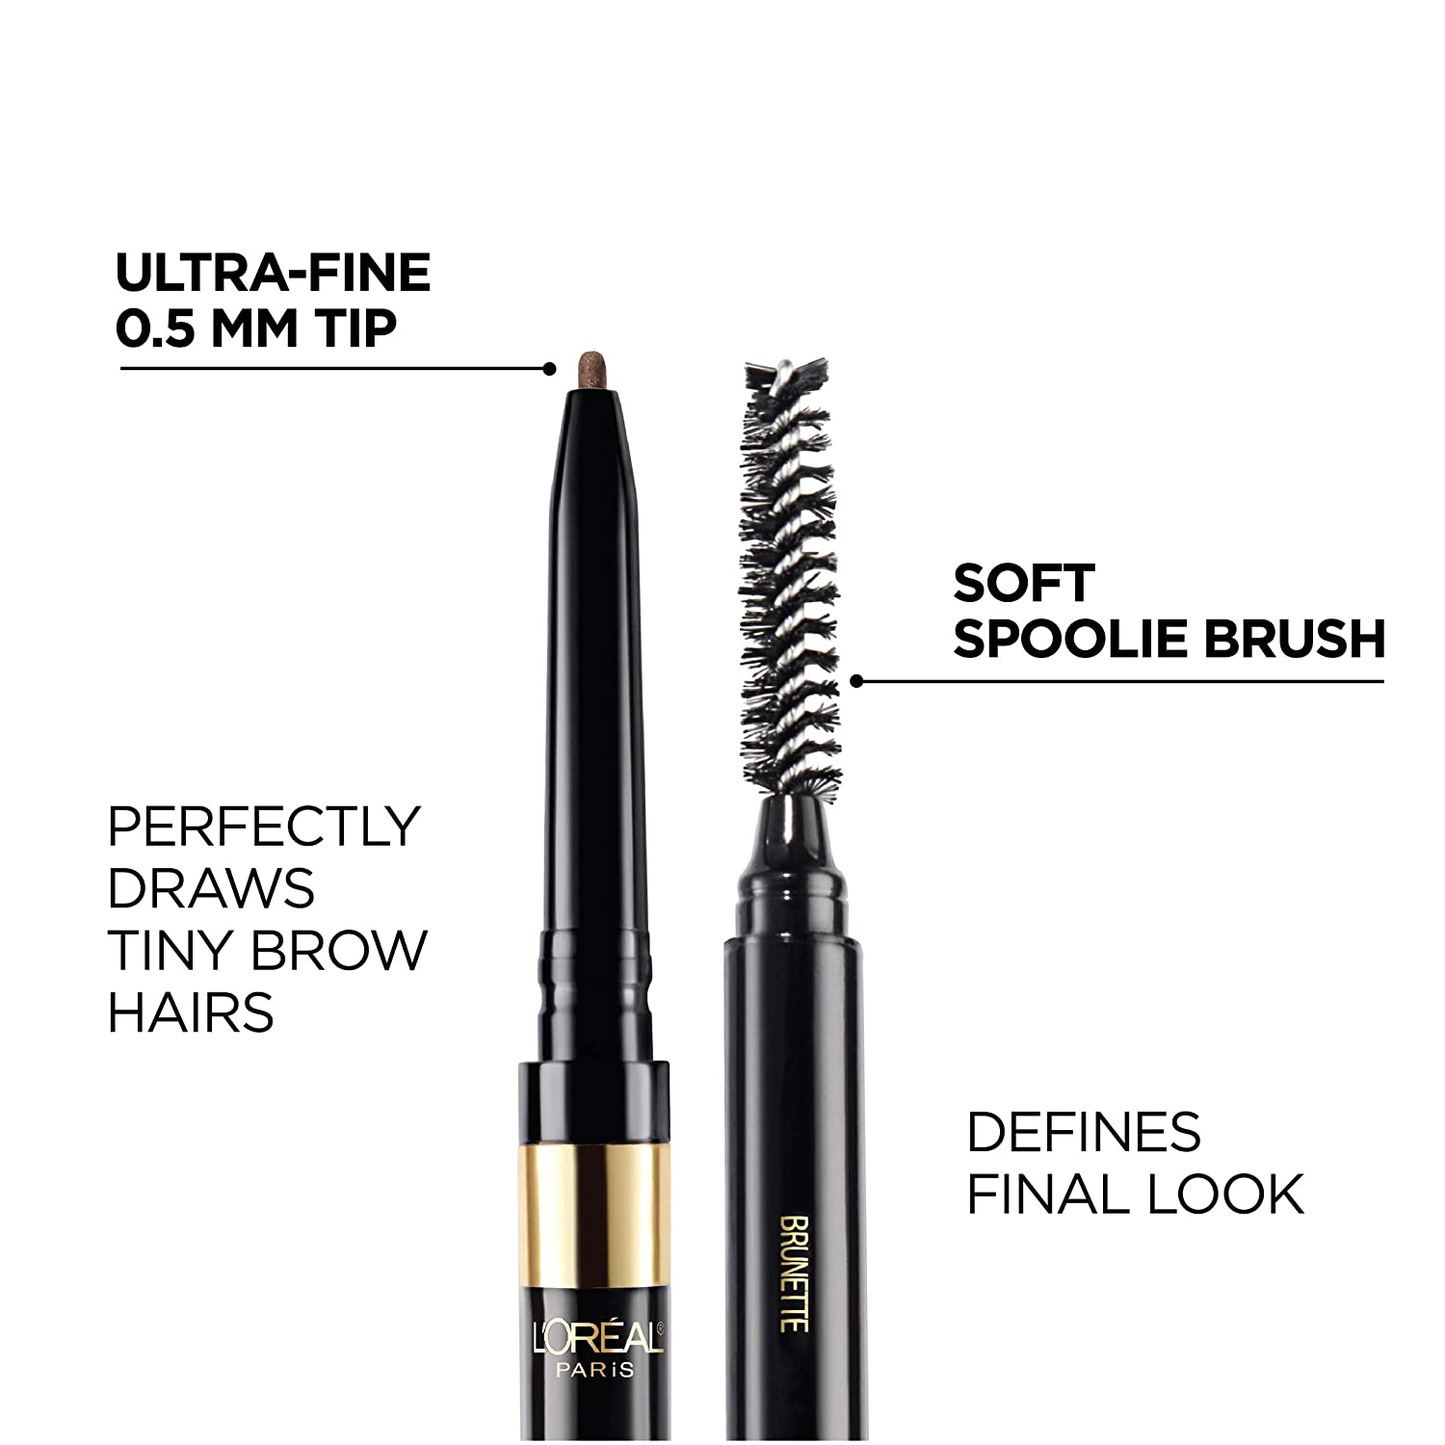 L'Oreal Paris Makeup Brow Stylist Definer Waterproof Eyebrow Pencil UltraFine